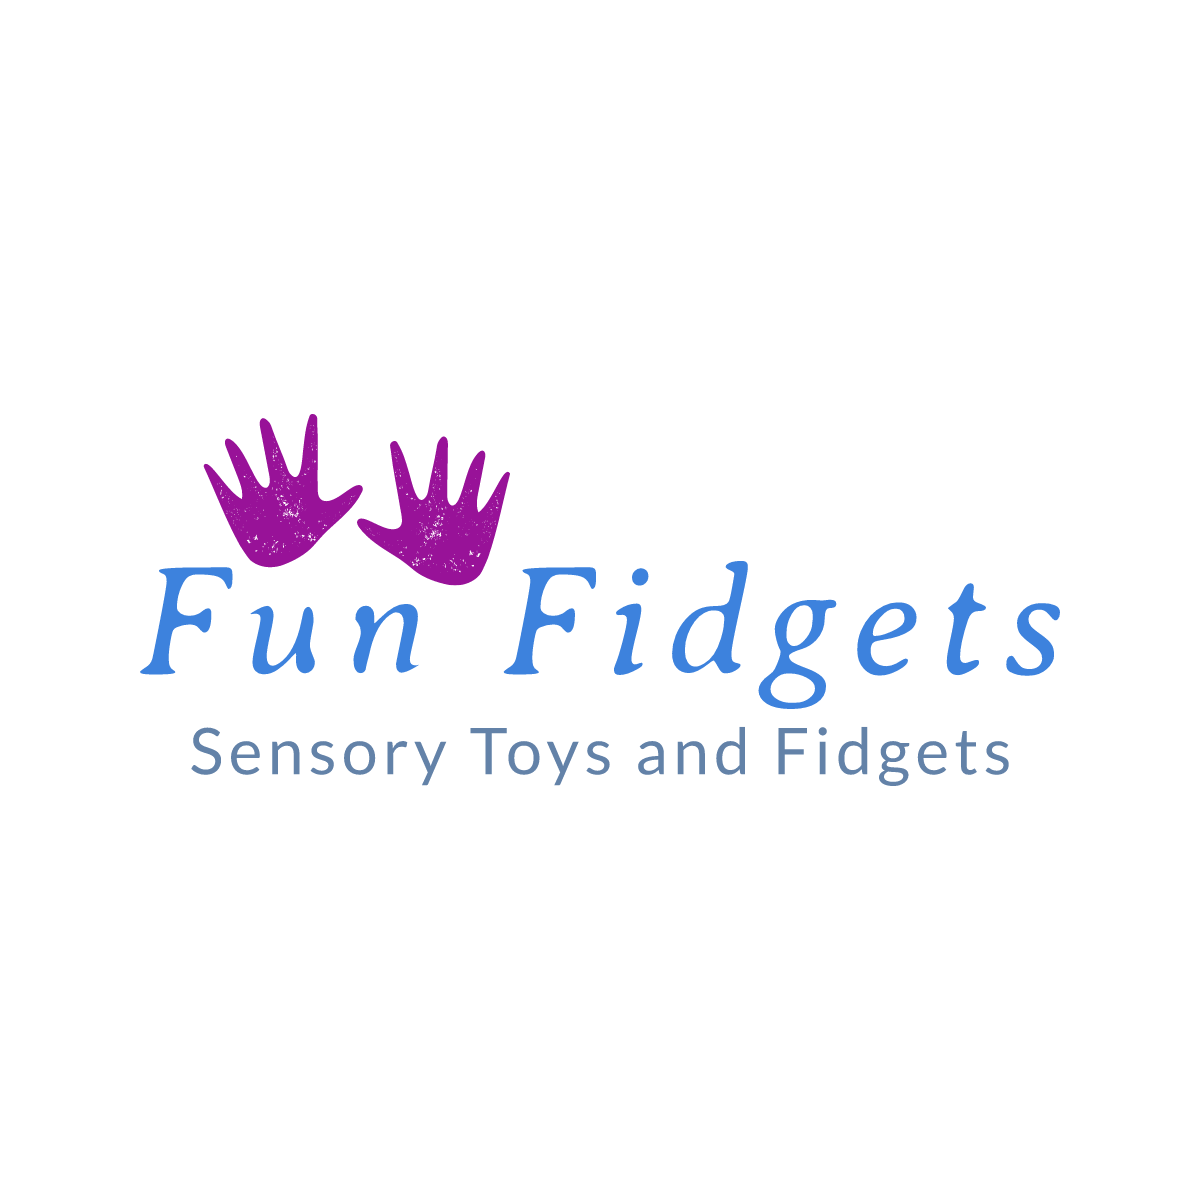 fun fidgets logo